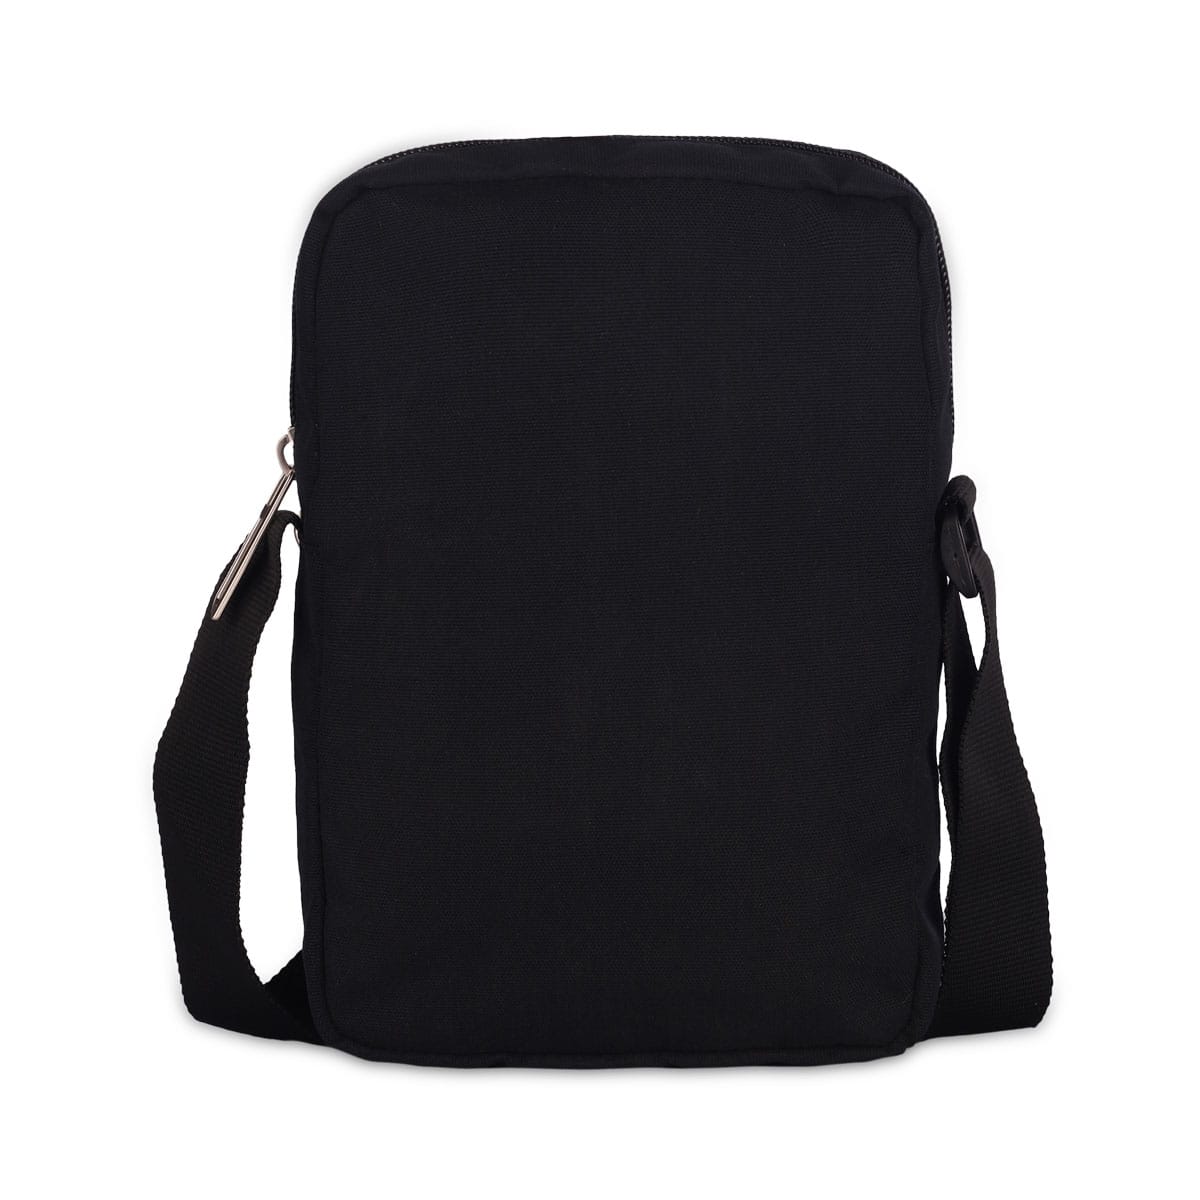 Black | Protecta Proceed Unisex Sling Bag-1